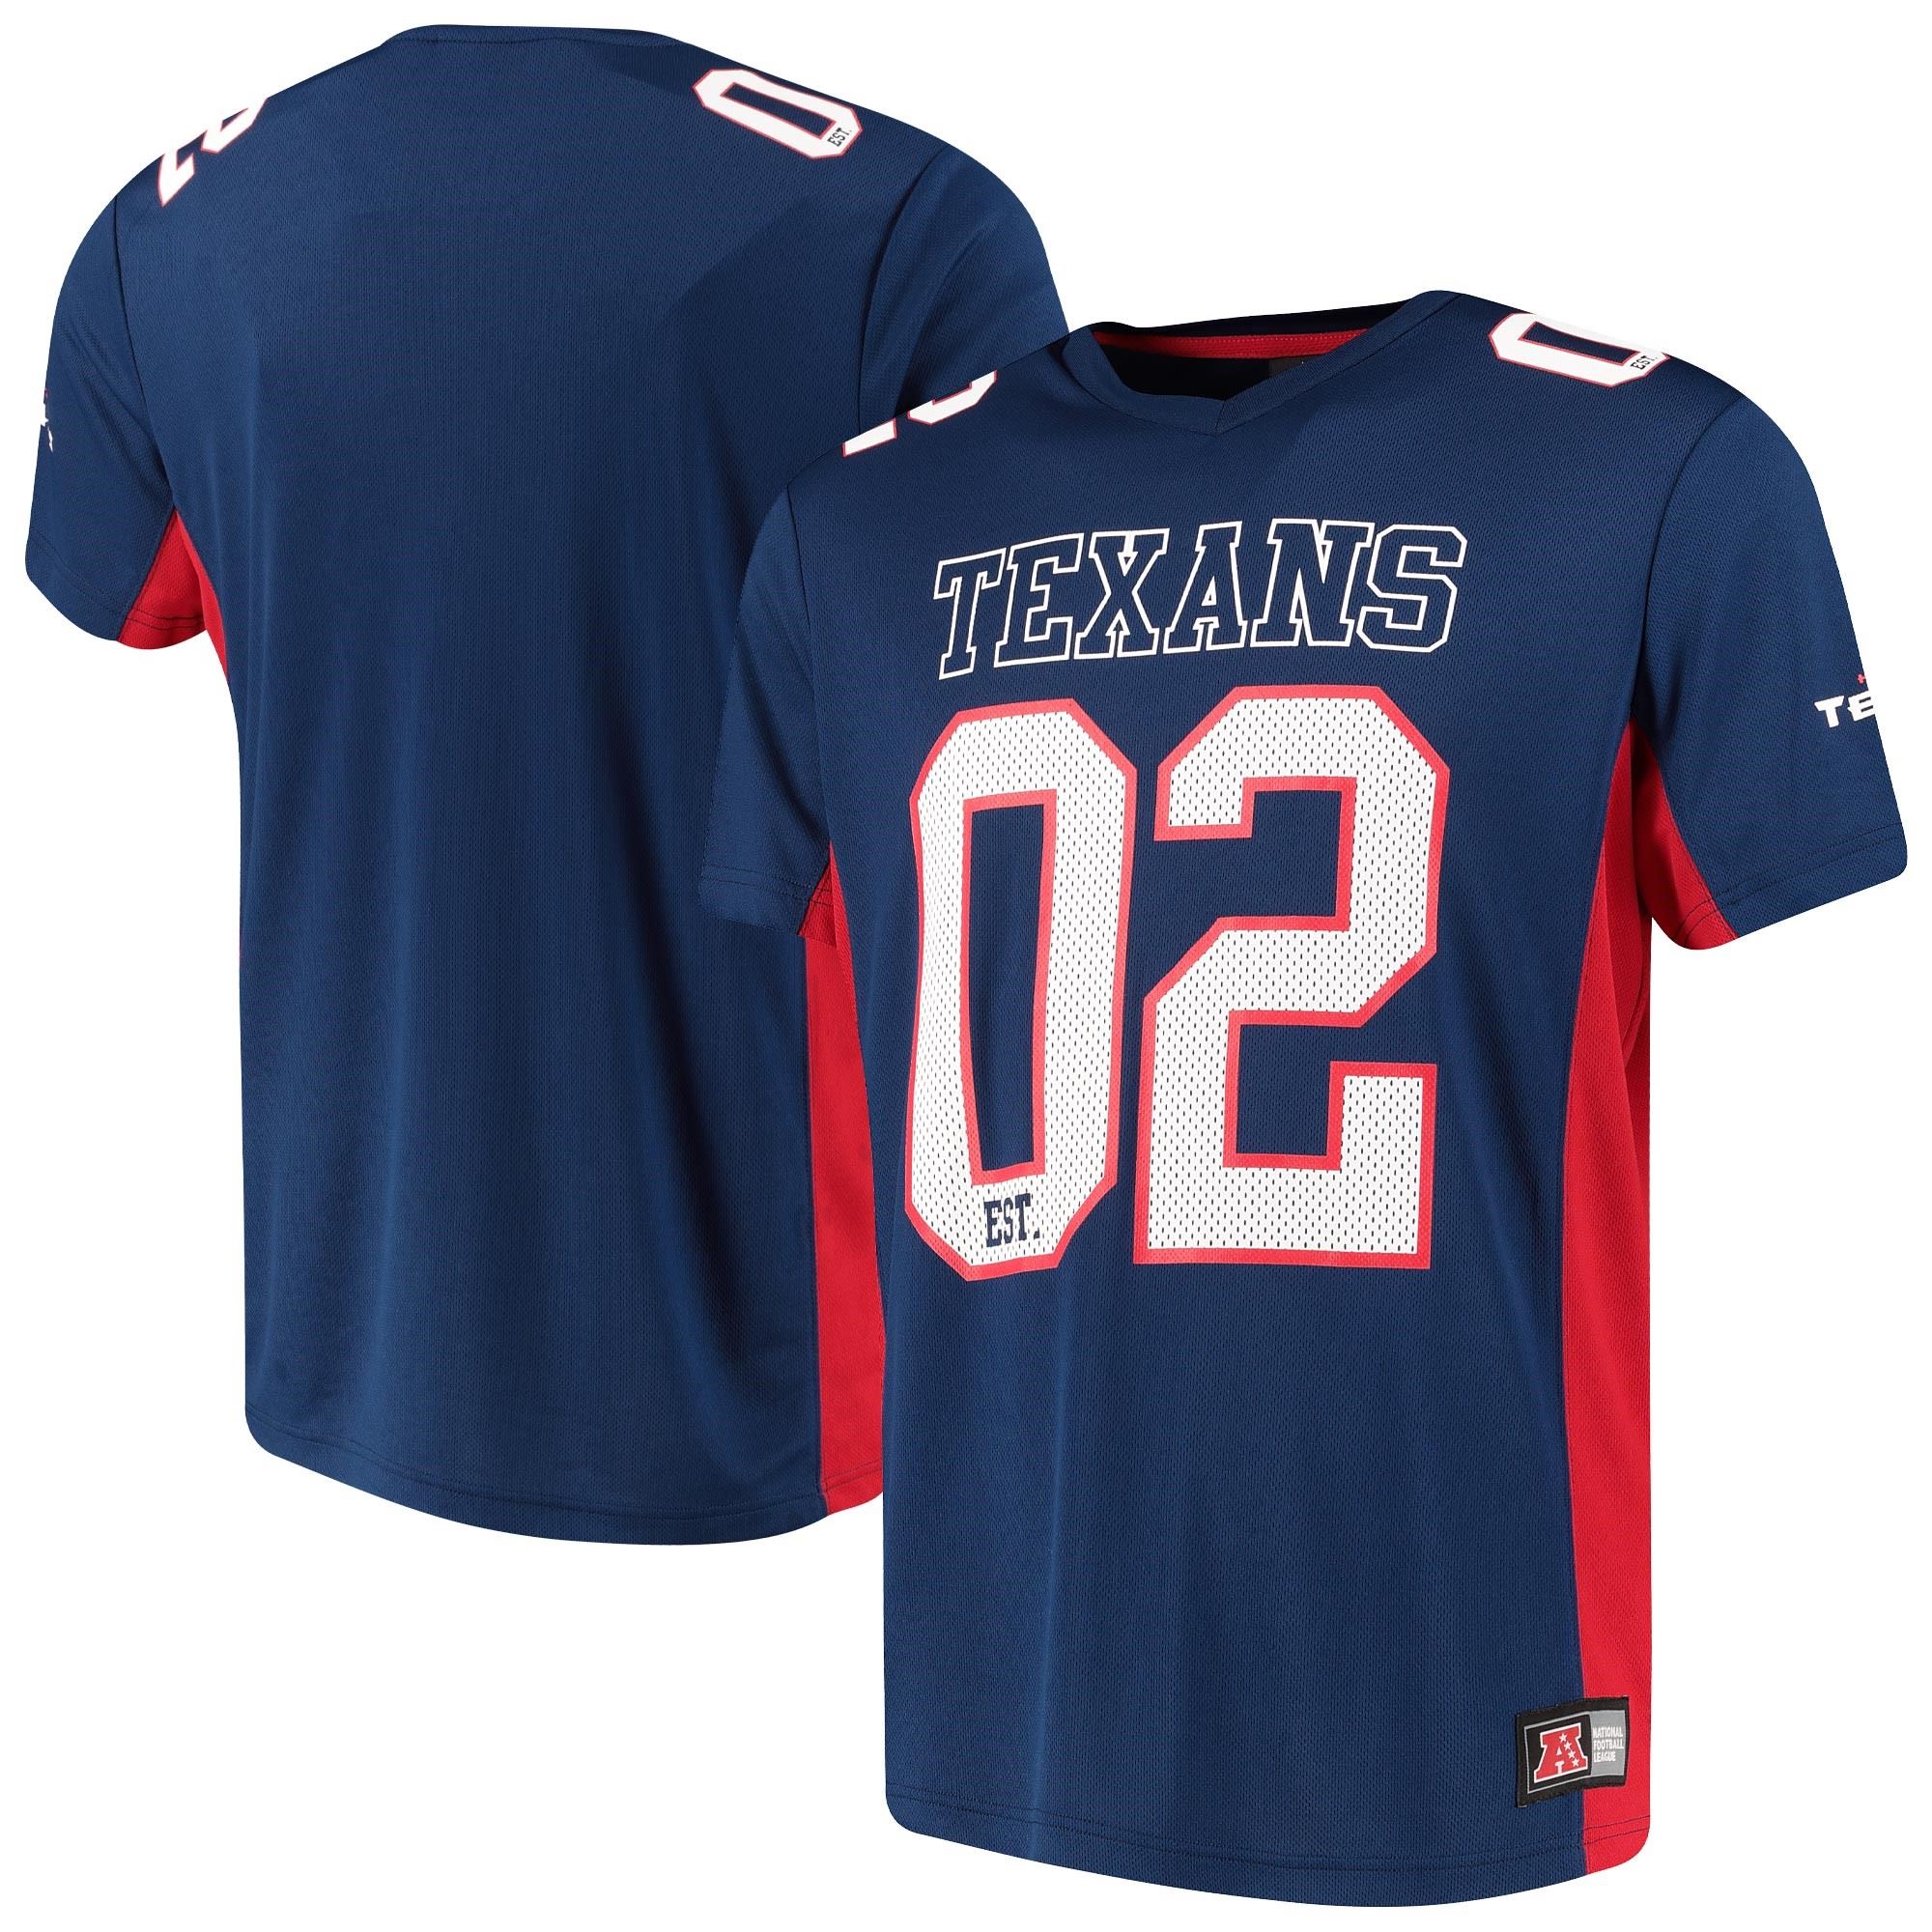 Houston Texans NFL Players Poly Mesh Blue T-Shirt Fanatics